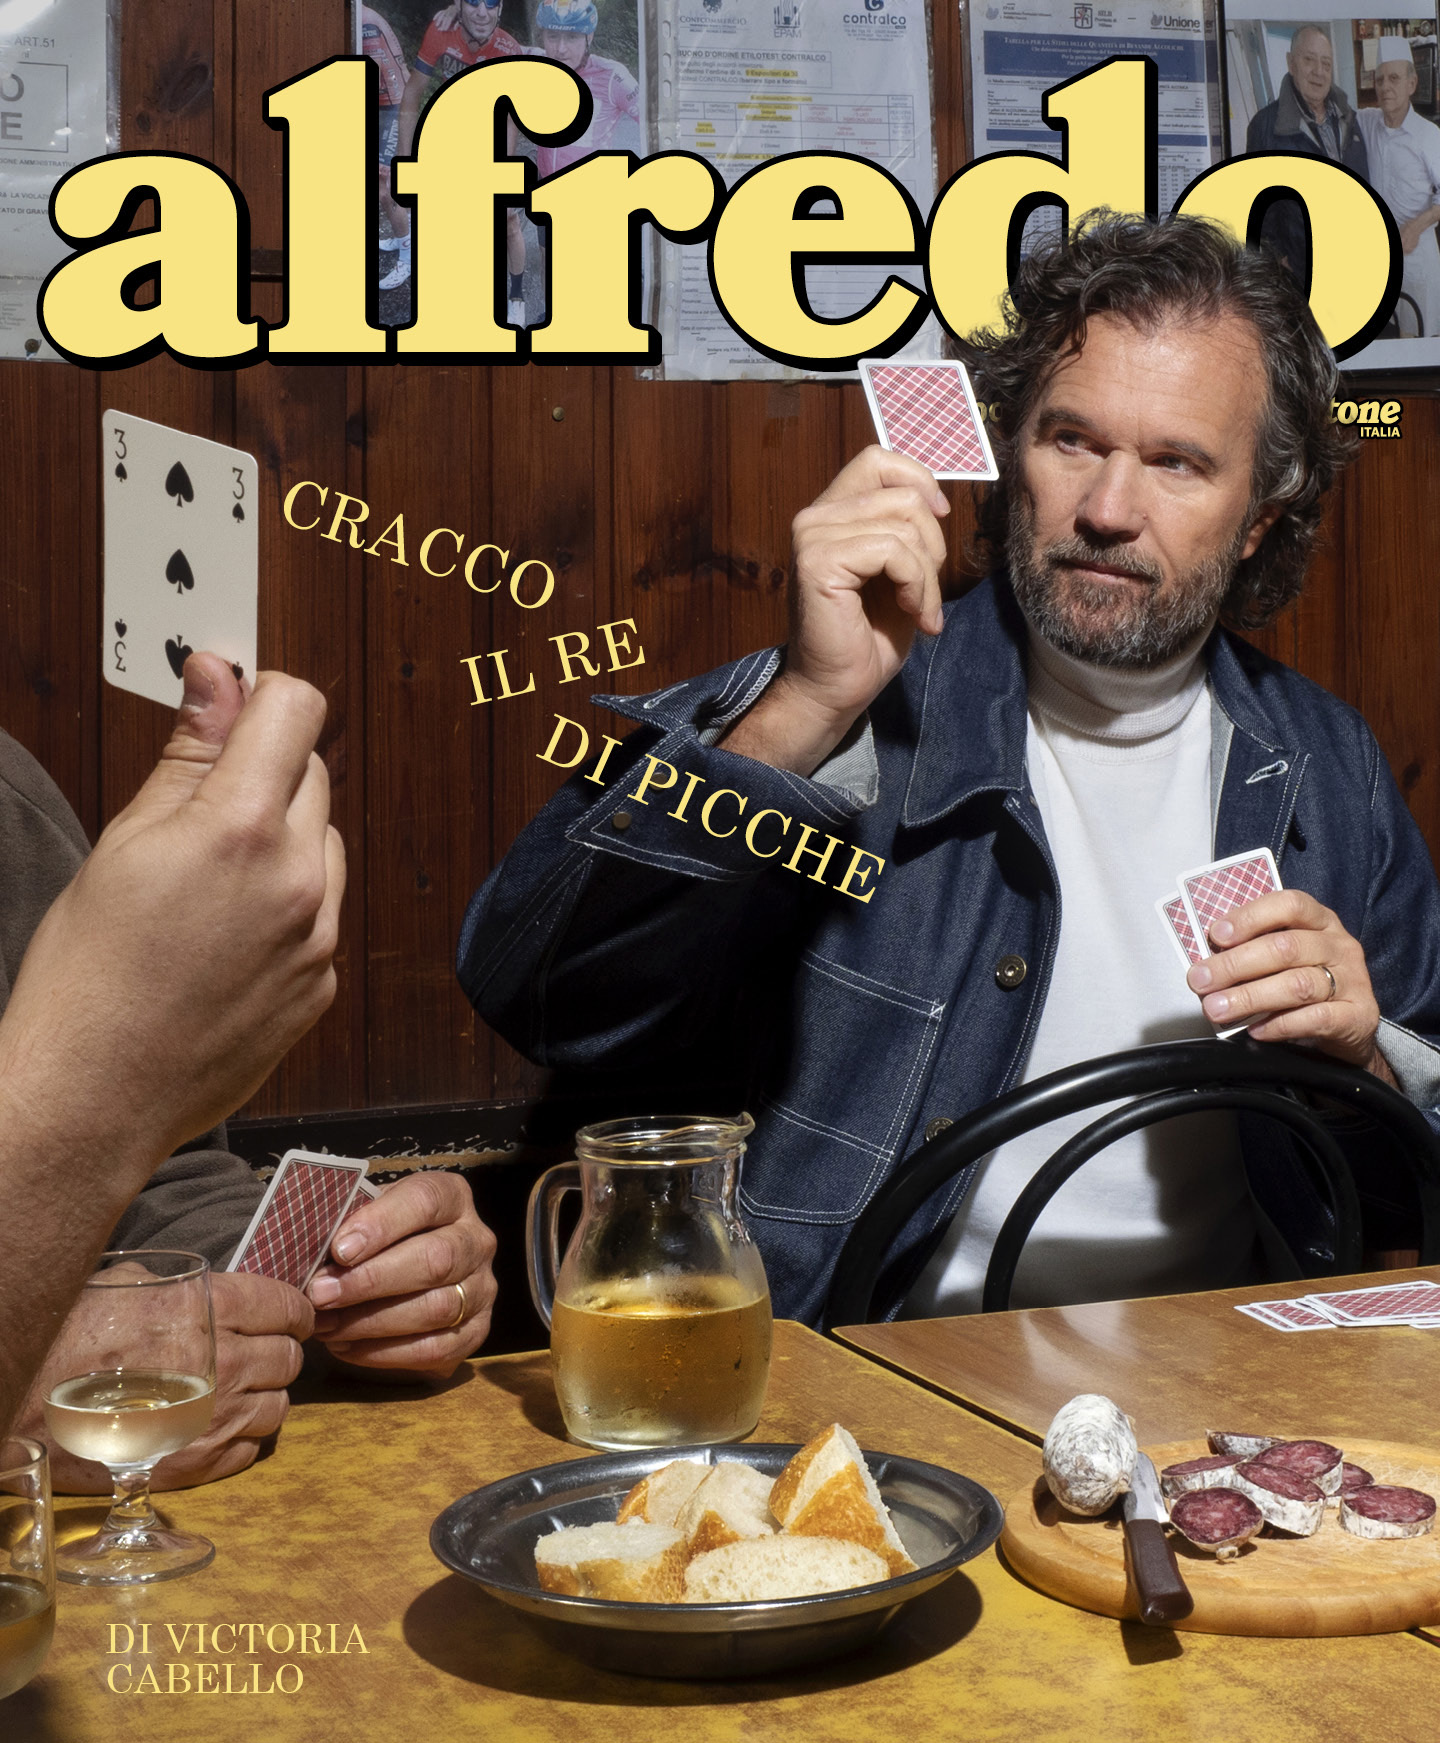 Alfredo digital cover